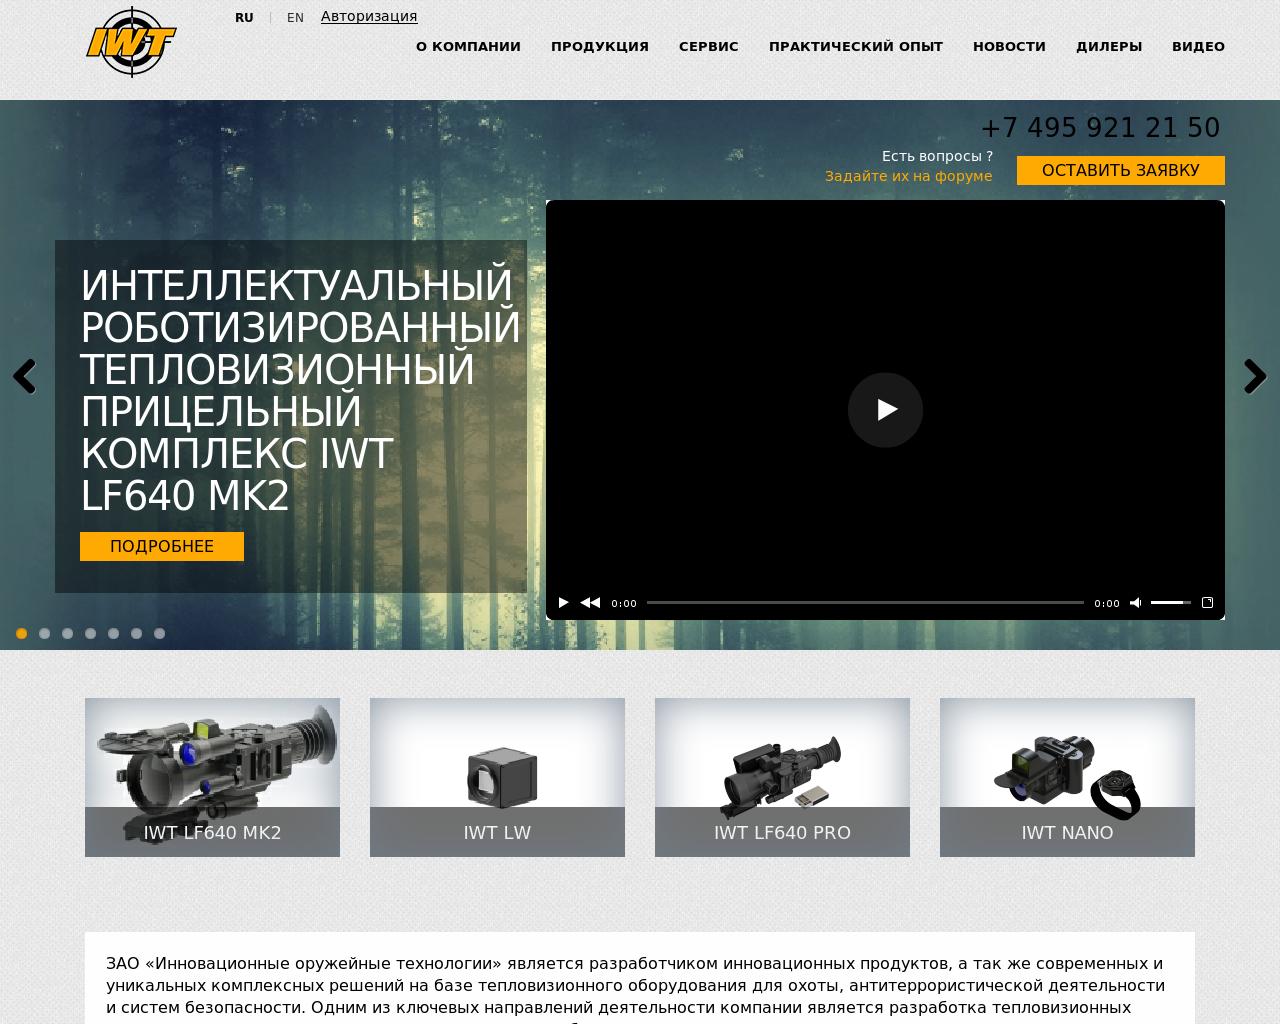 Изображение сайта inwetech.ru в разрешении 1280x1024